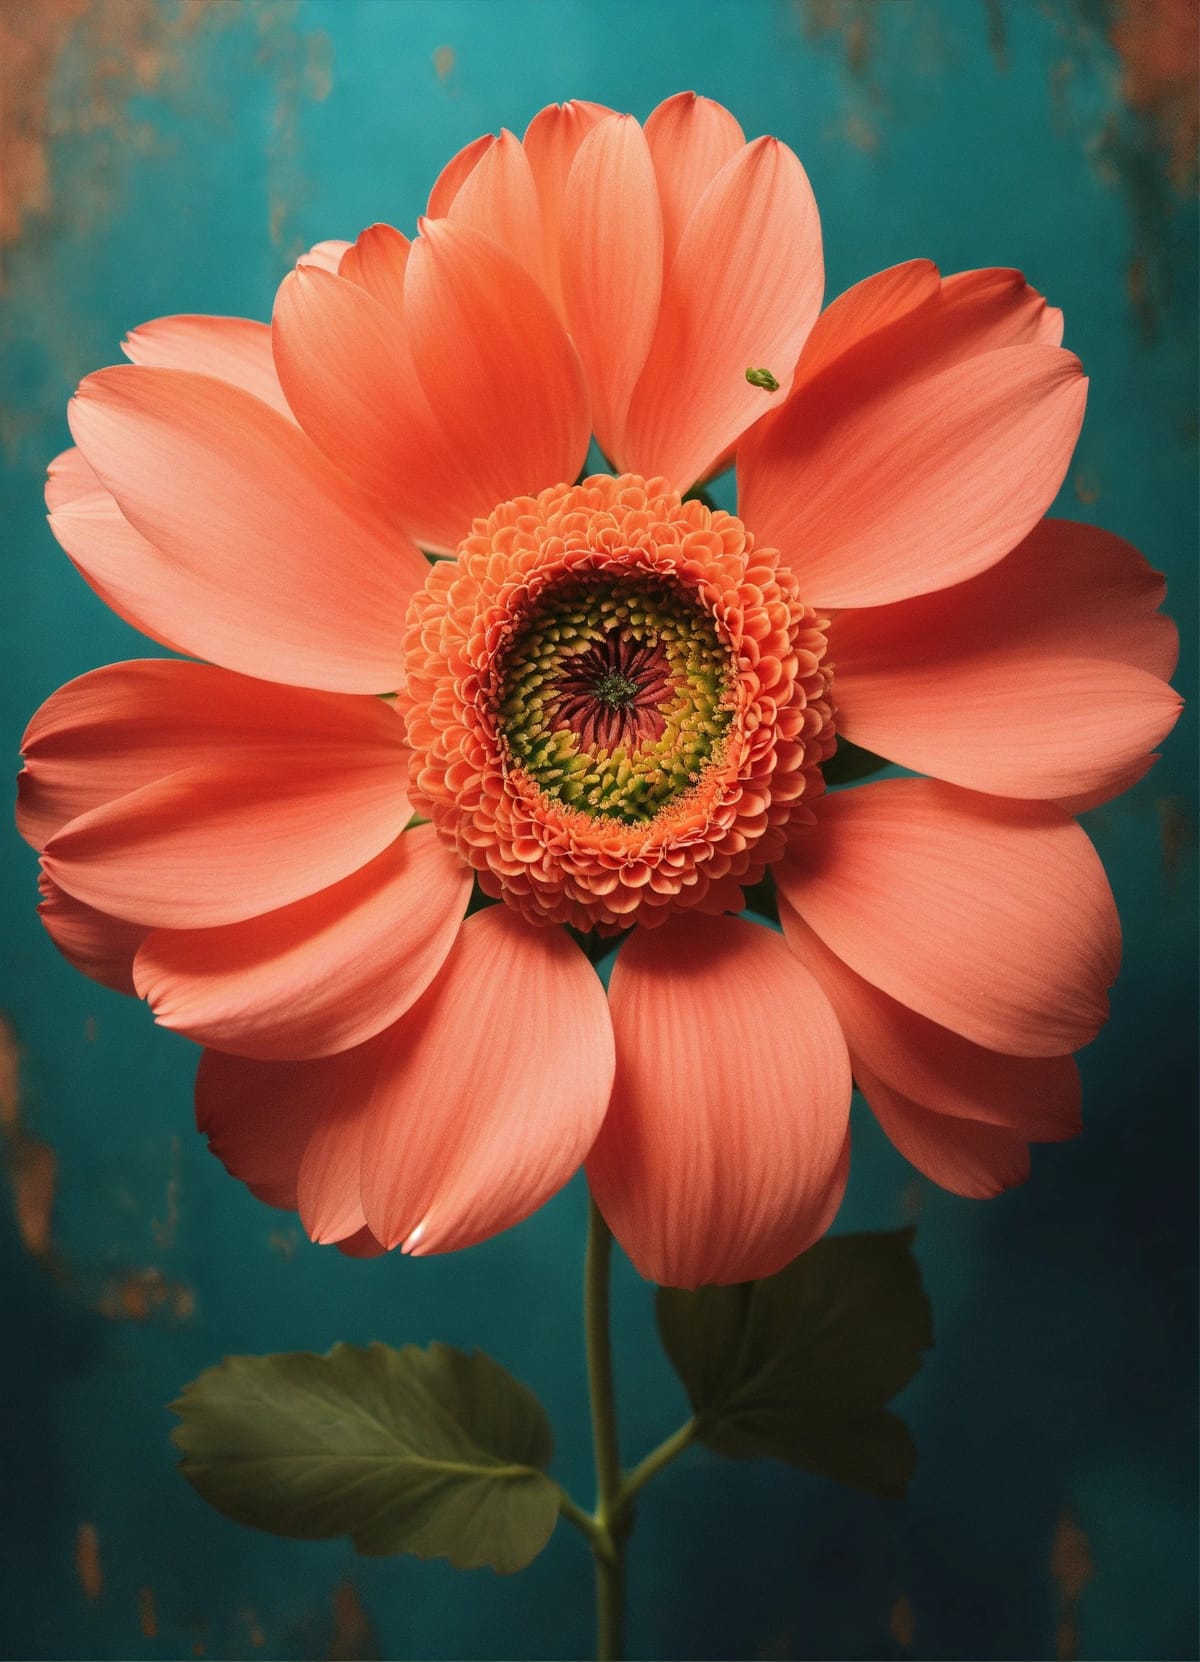 The Nameless Flower by Srinidhi Ranganathan